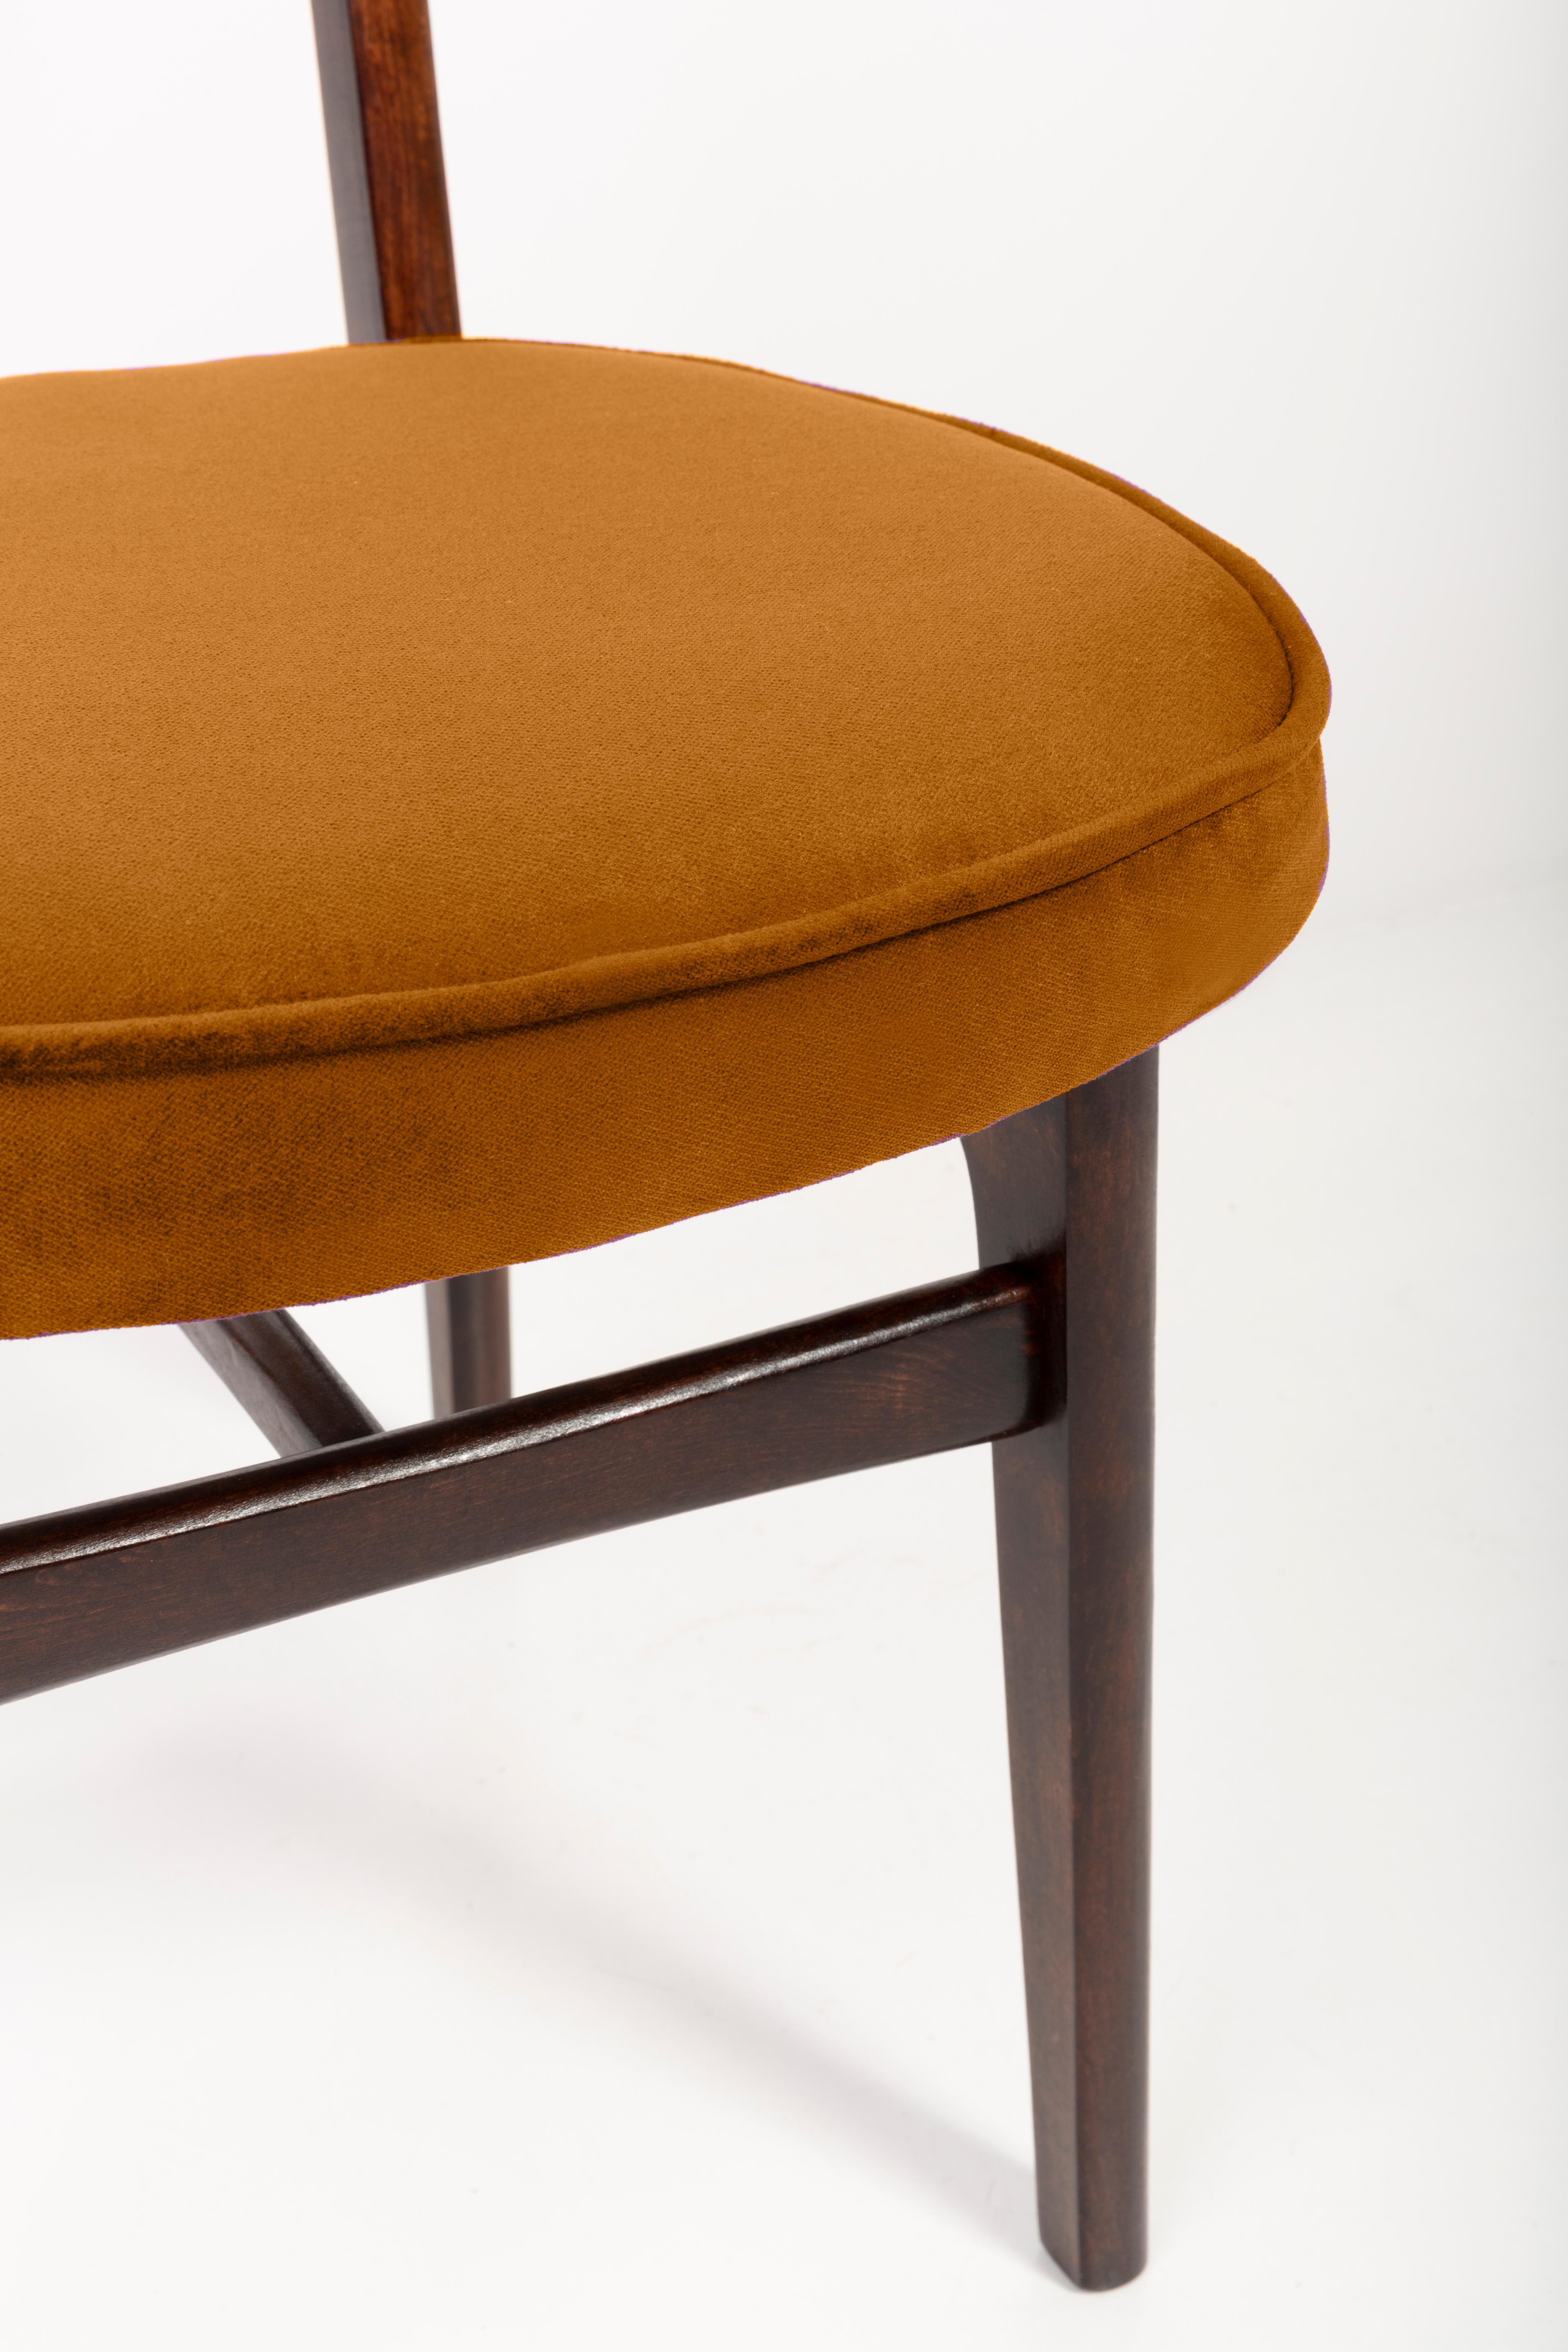 20th Century Mid-Century Copper Velvet Chair Designed by Rajmund Halas, Europe, 1960s For Sale